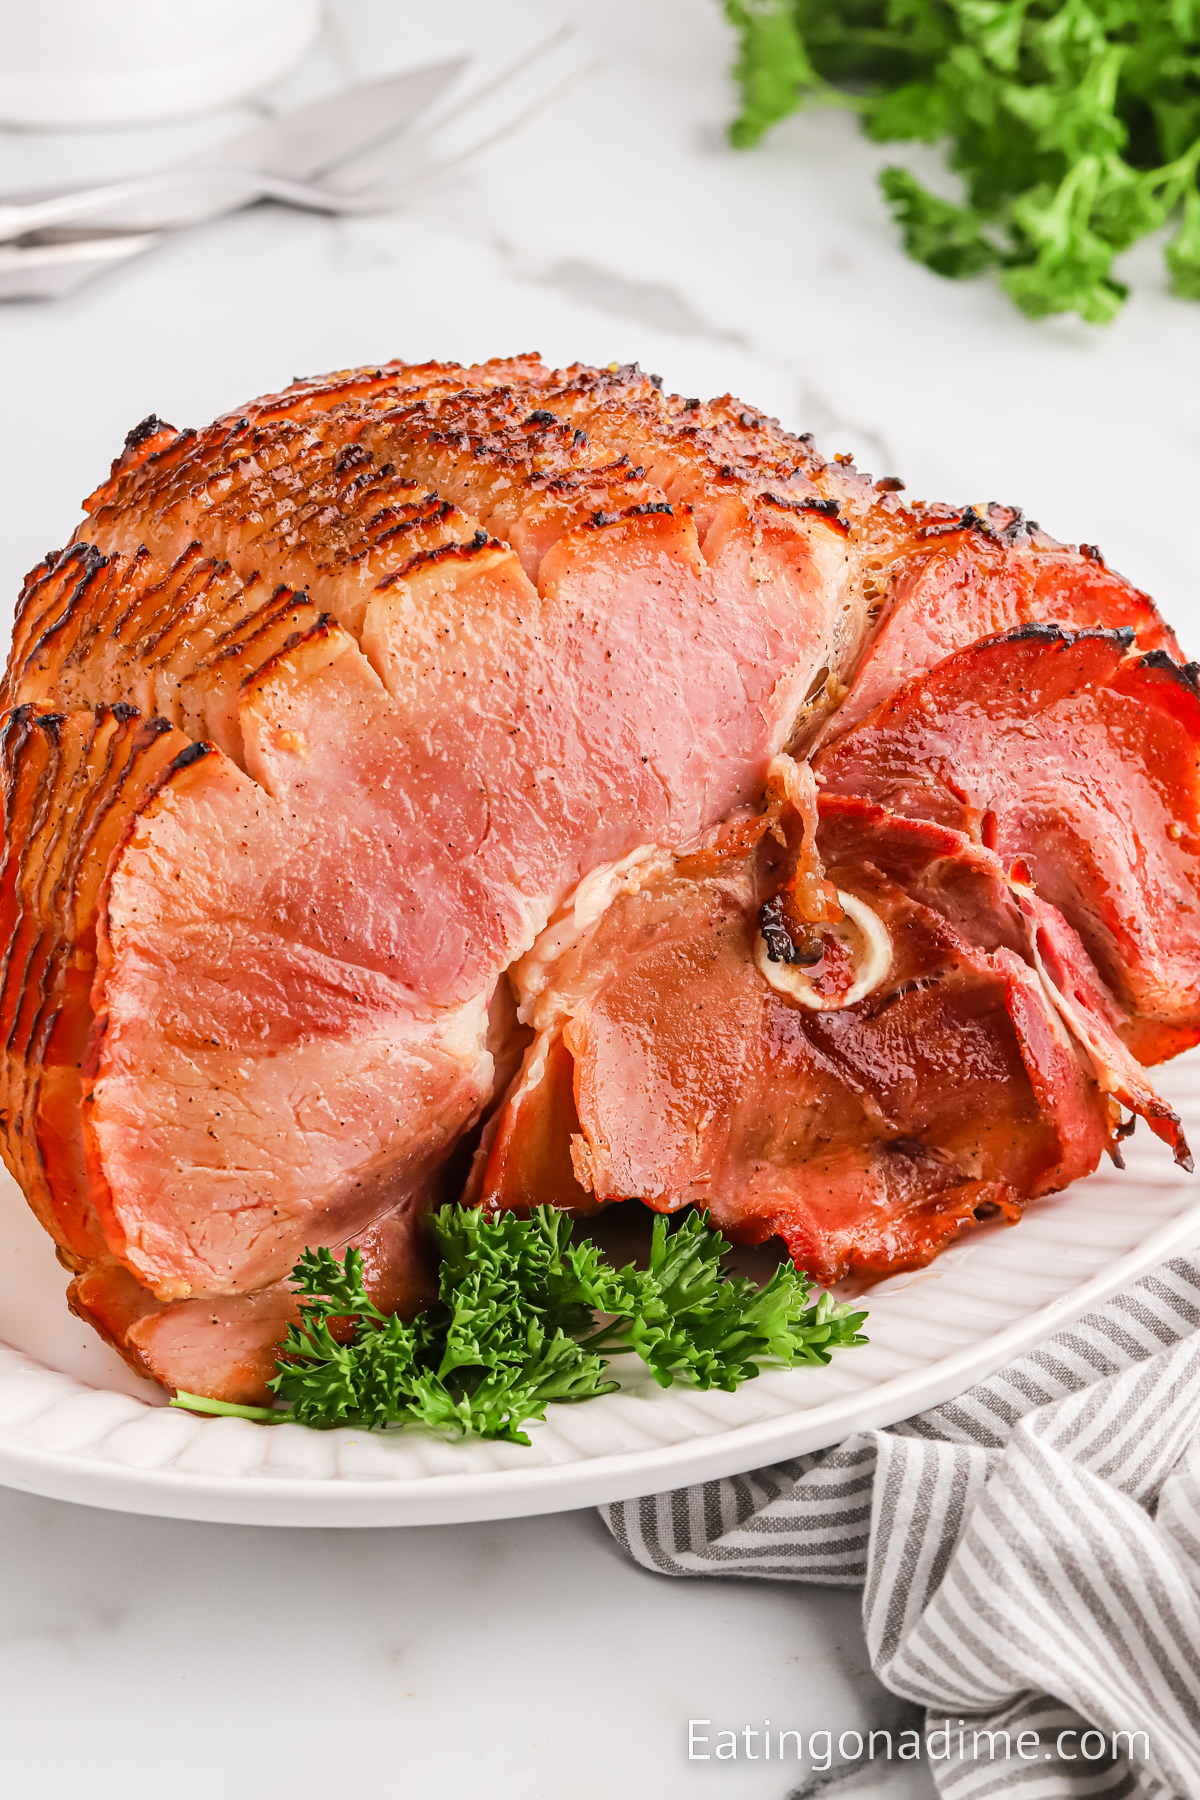 Slice ham on a plate